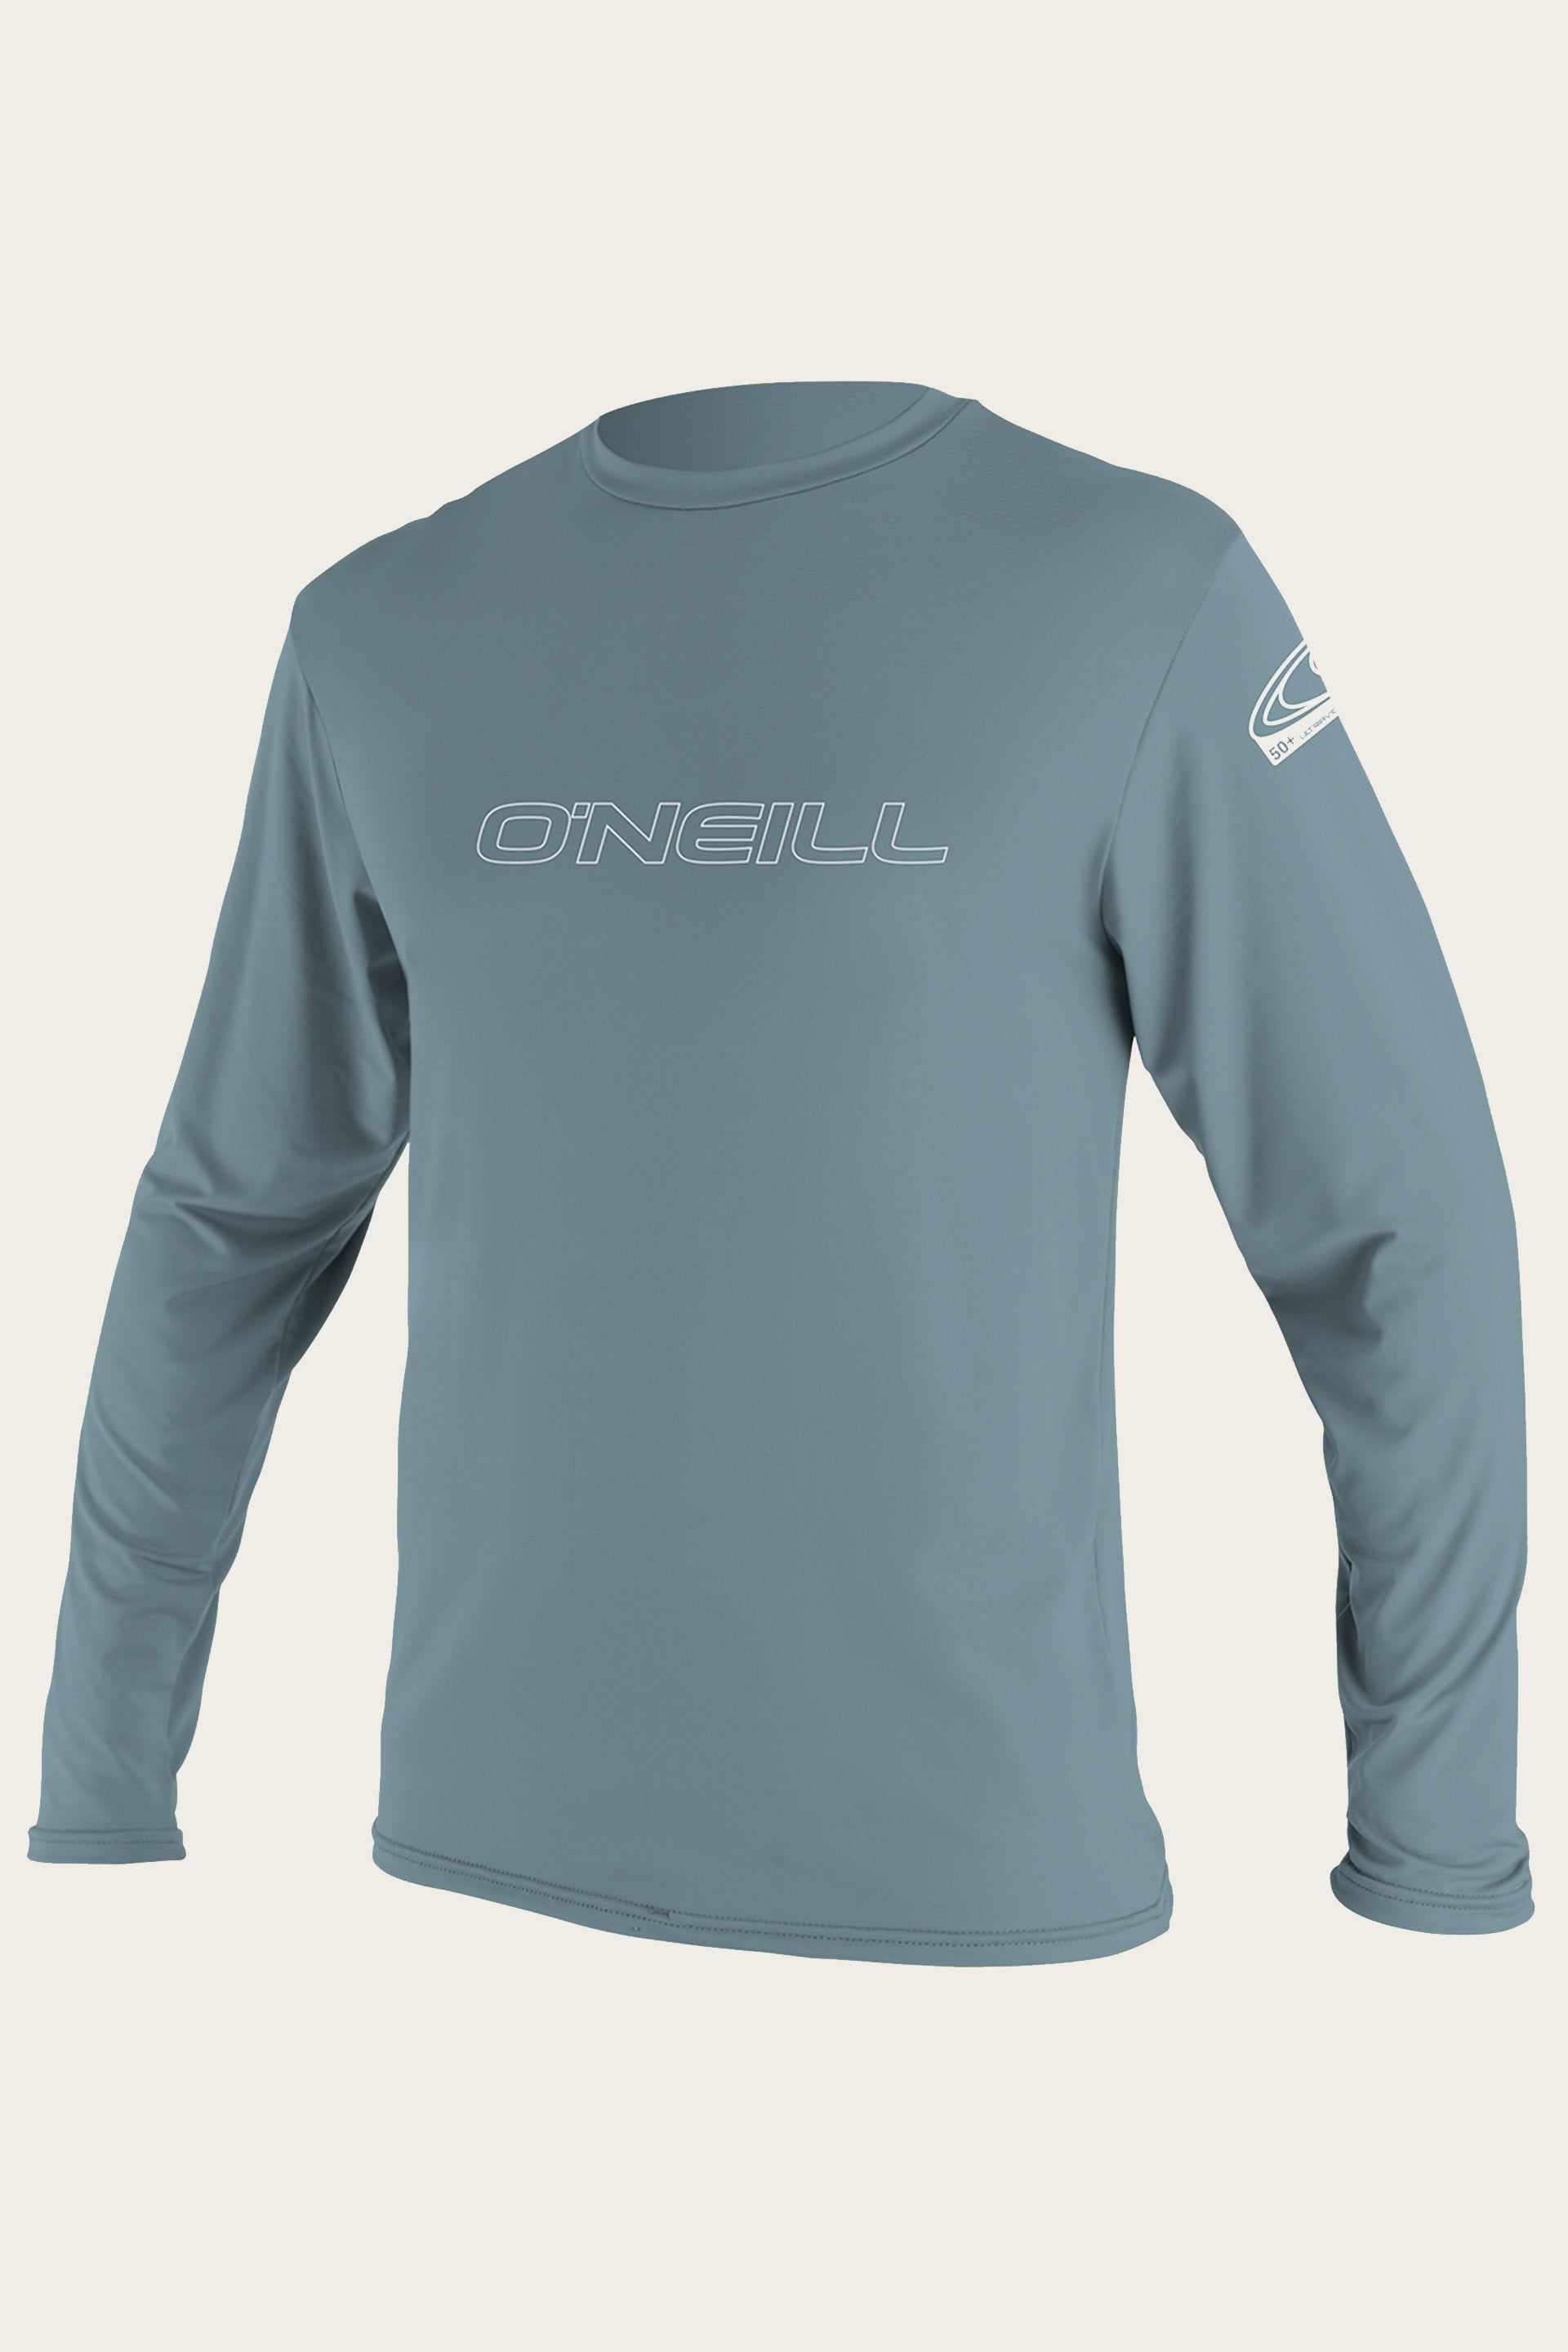 O'Neill Basics Long Sleeve Sun Shirt - 88 Gear